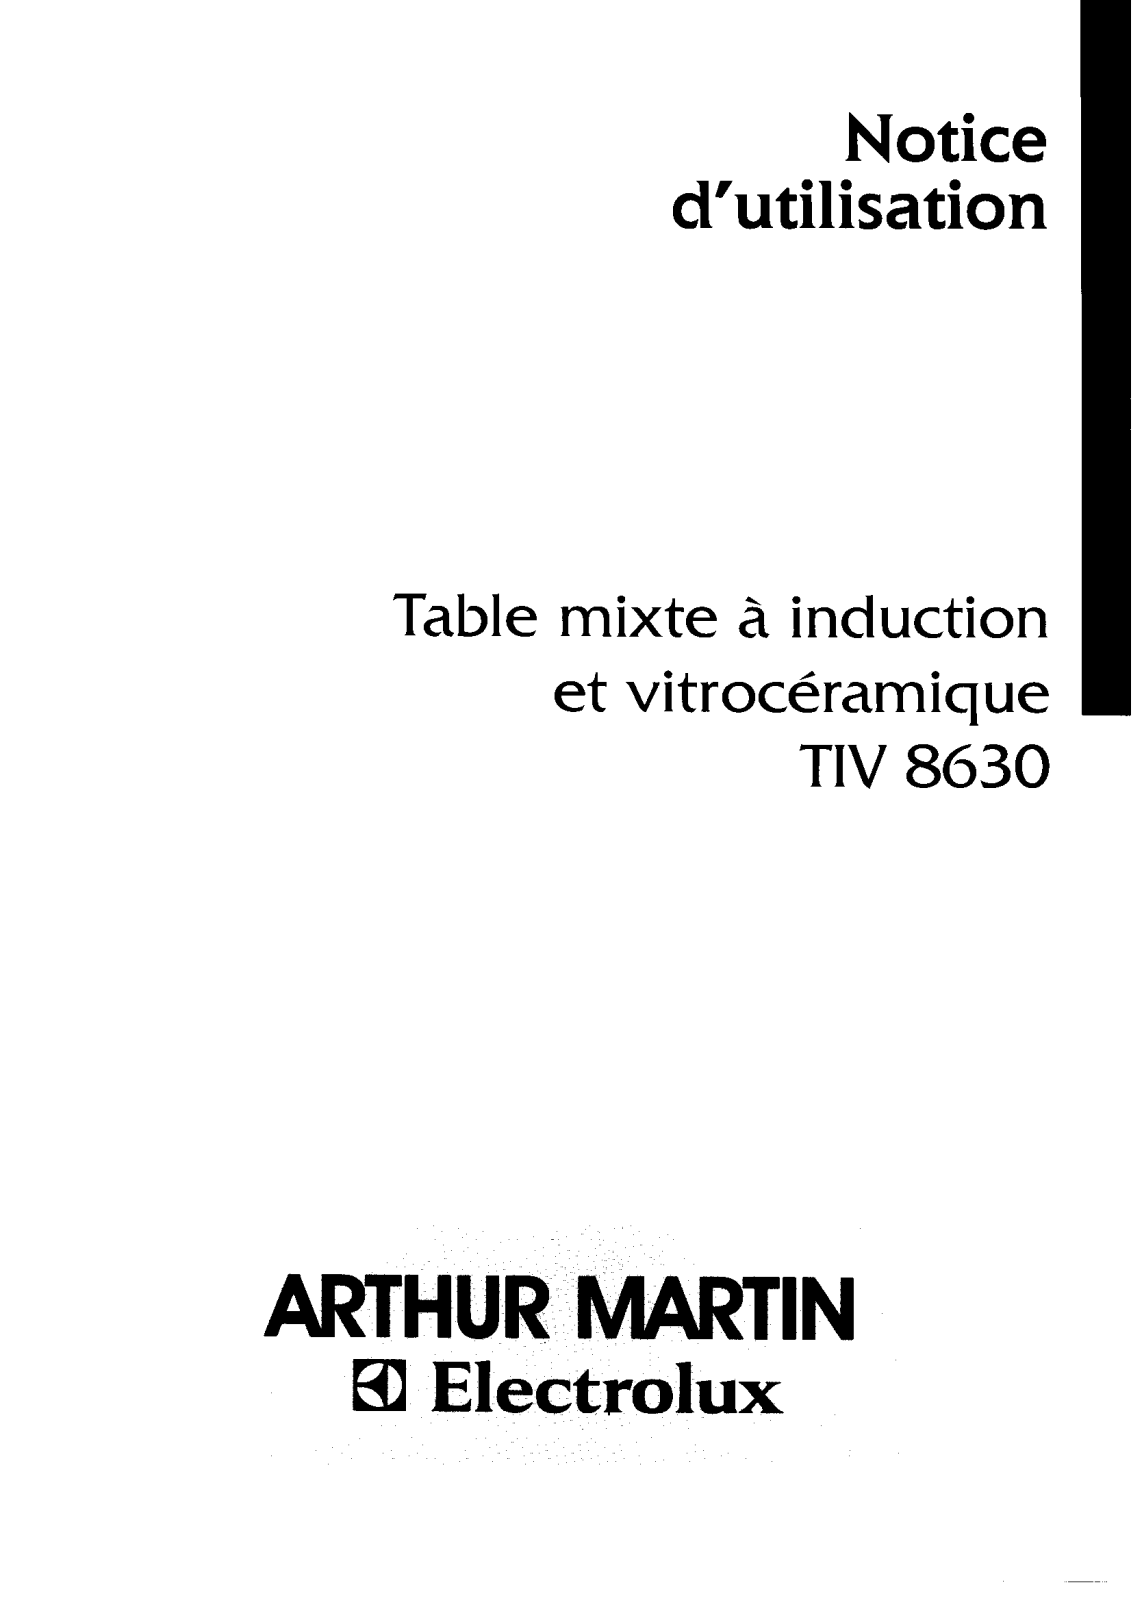 Arthur martin TI8630 User Manual